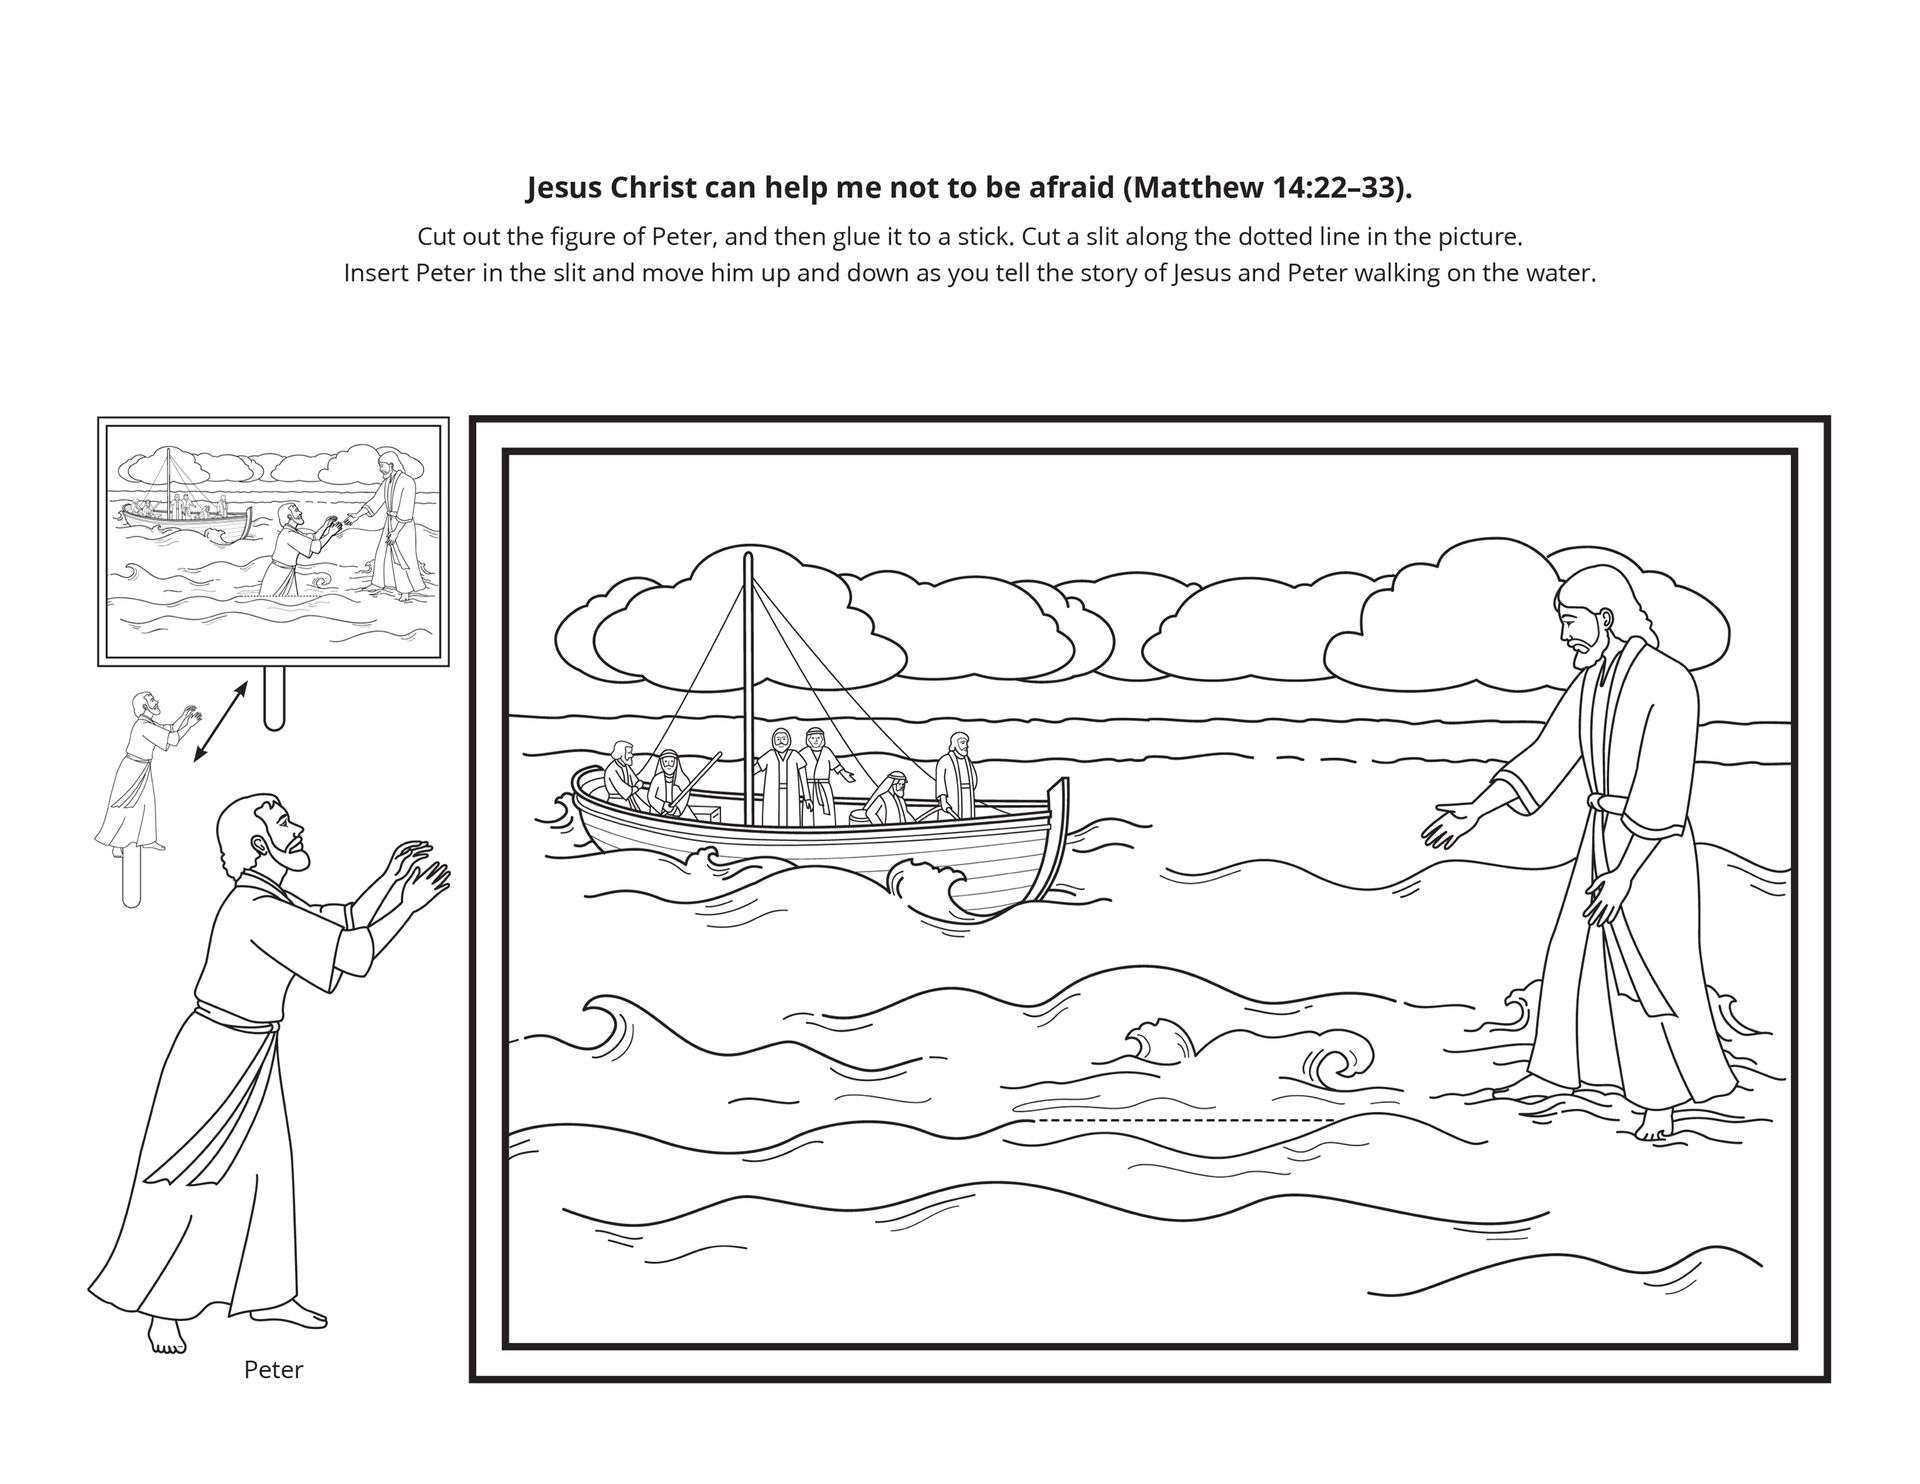 An illustration of Jesus Christ walking on water.